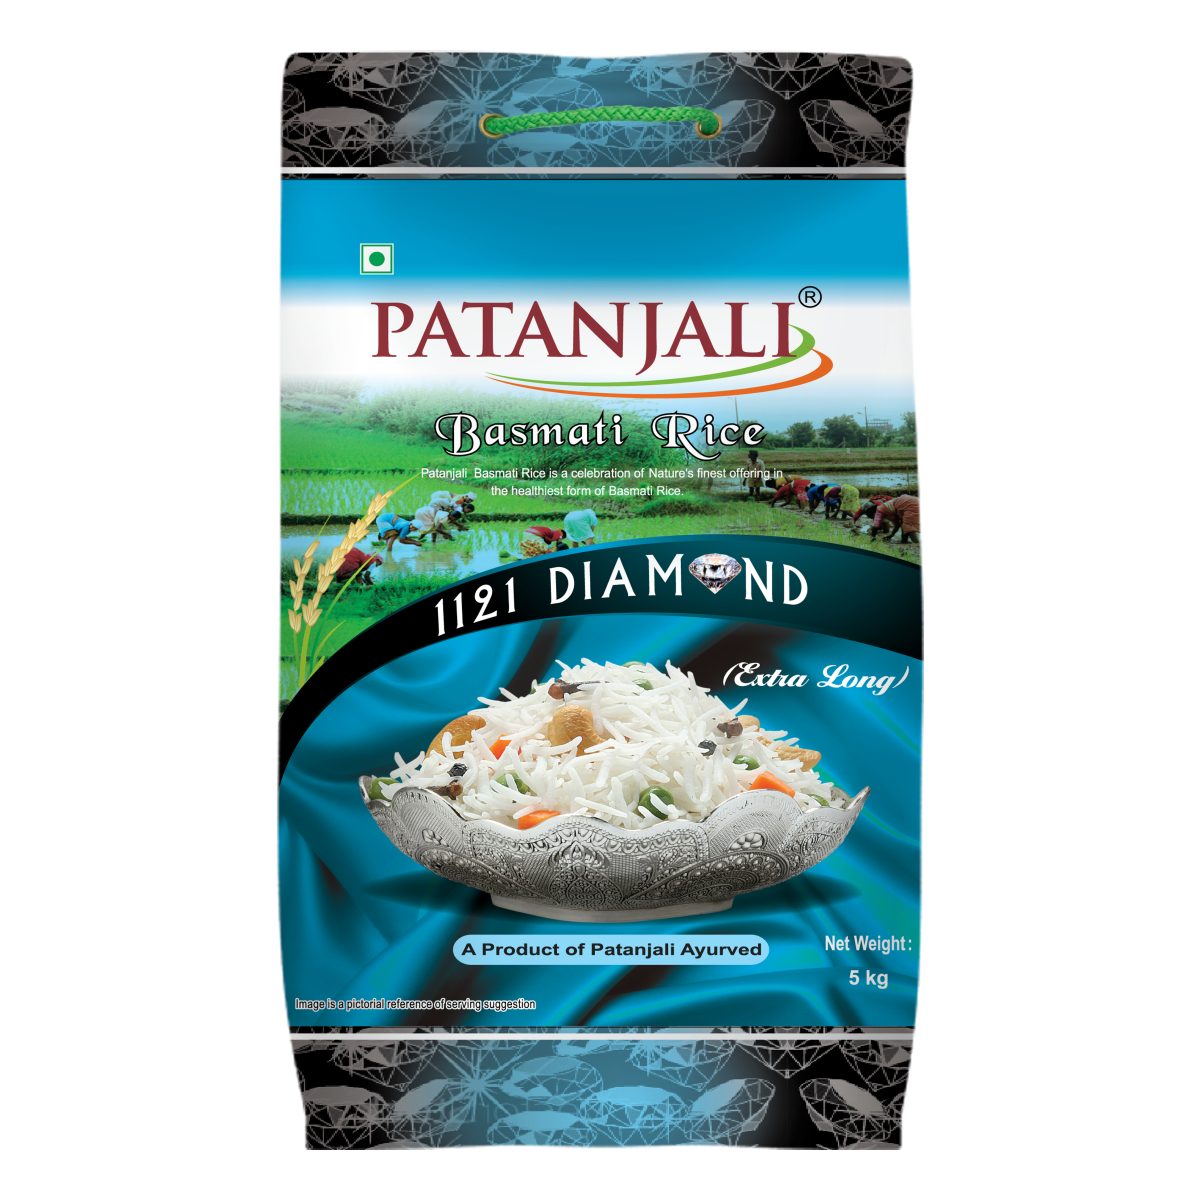 Patanjali Diamond Basmati Rice